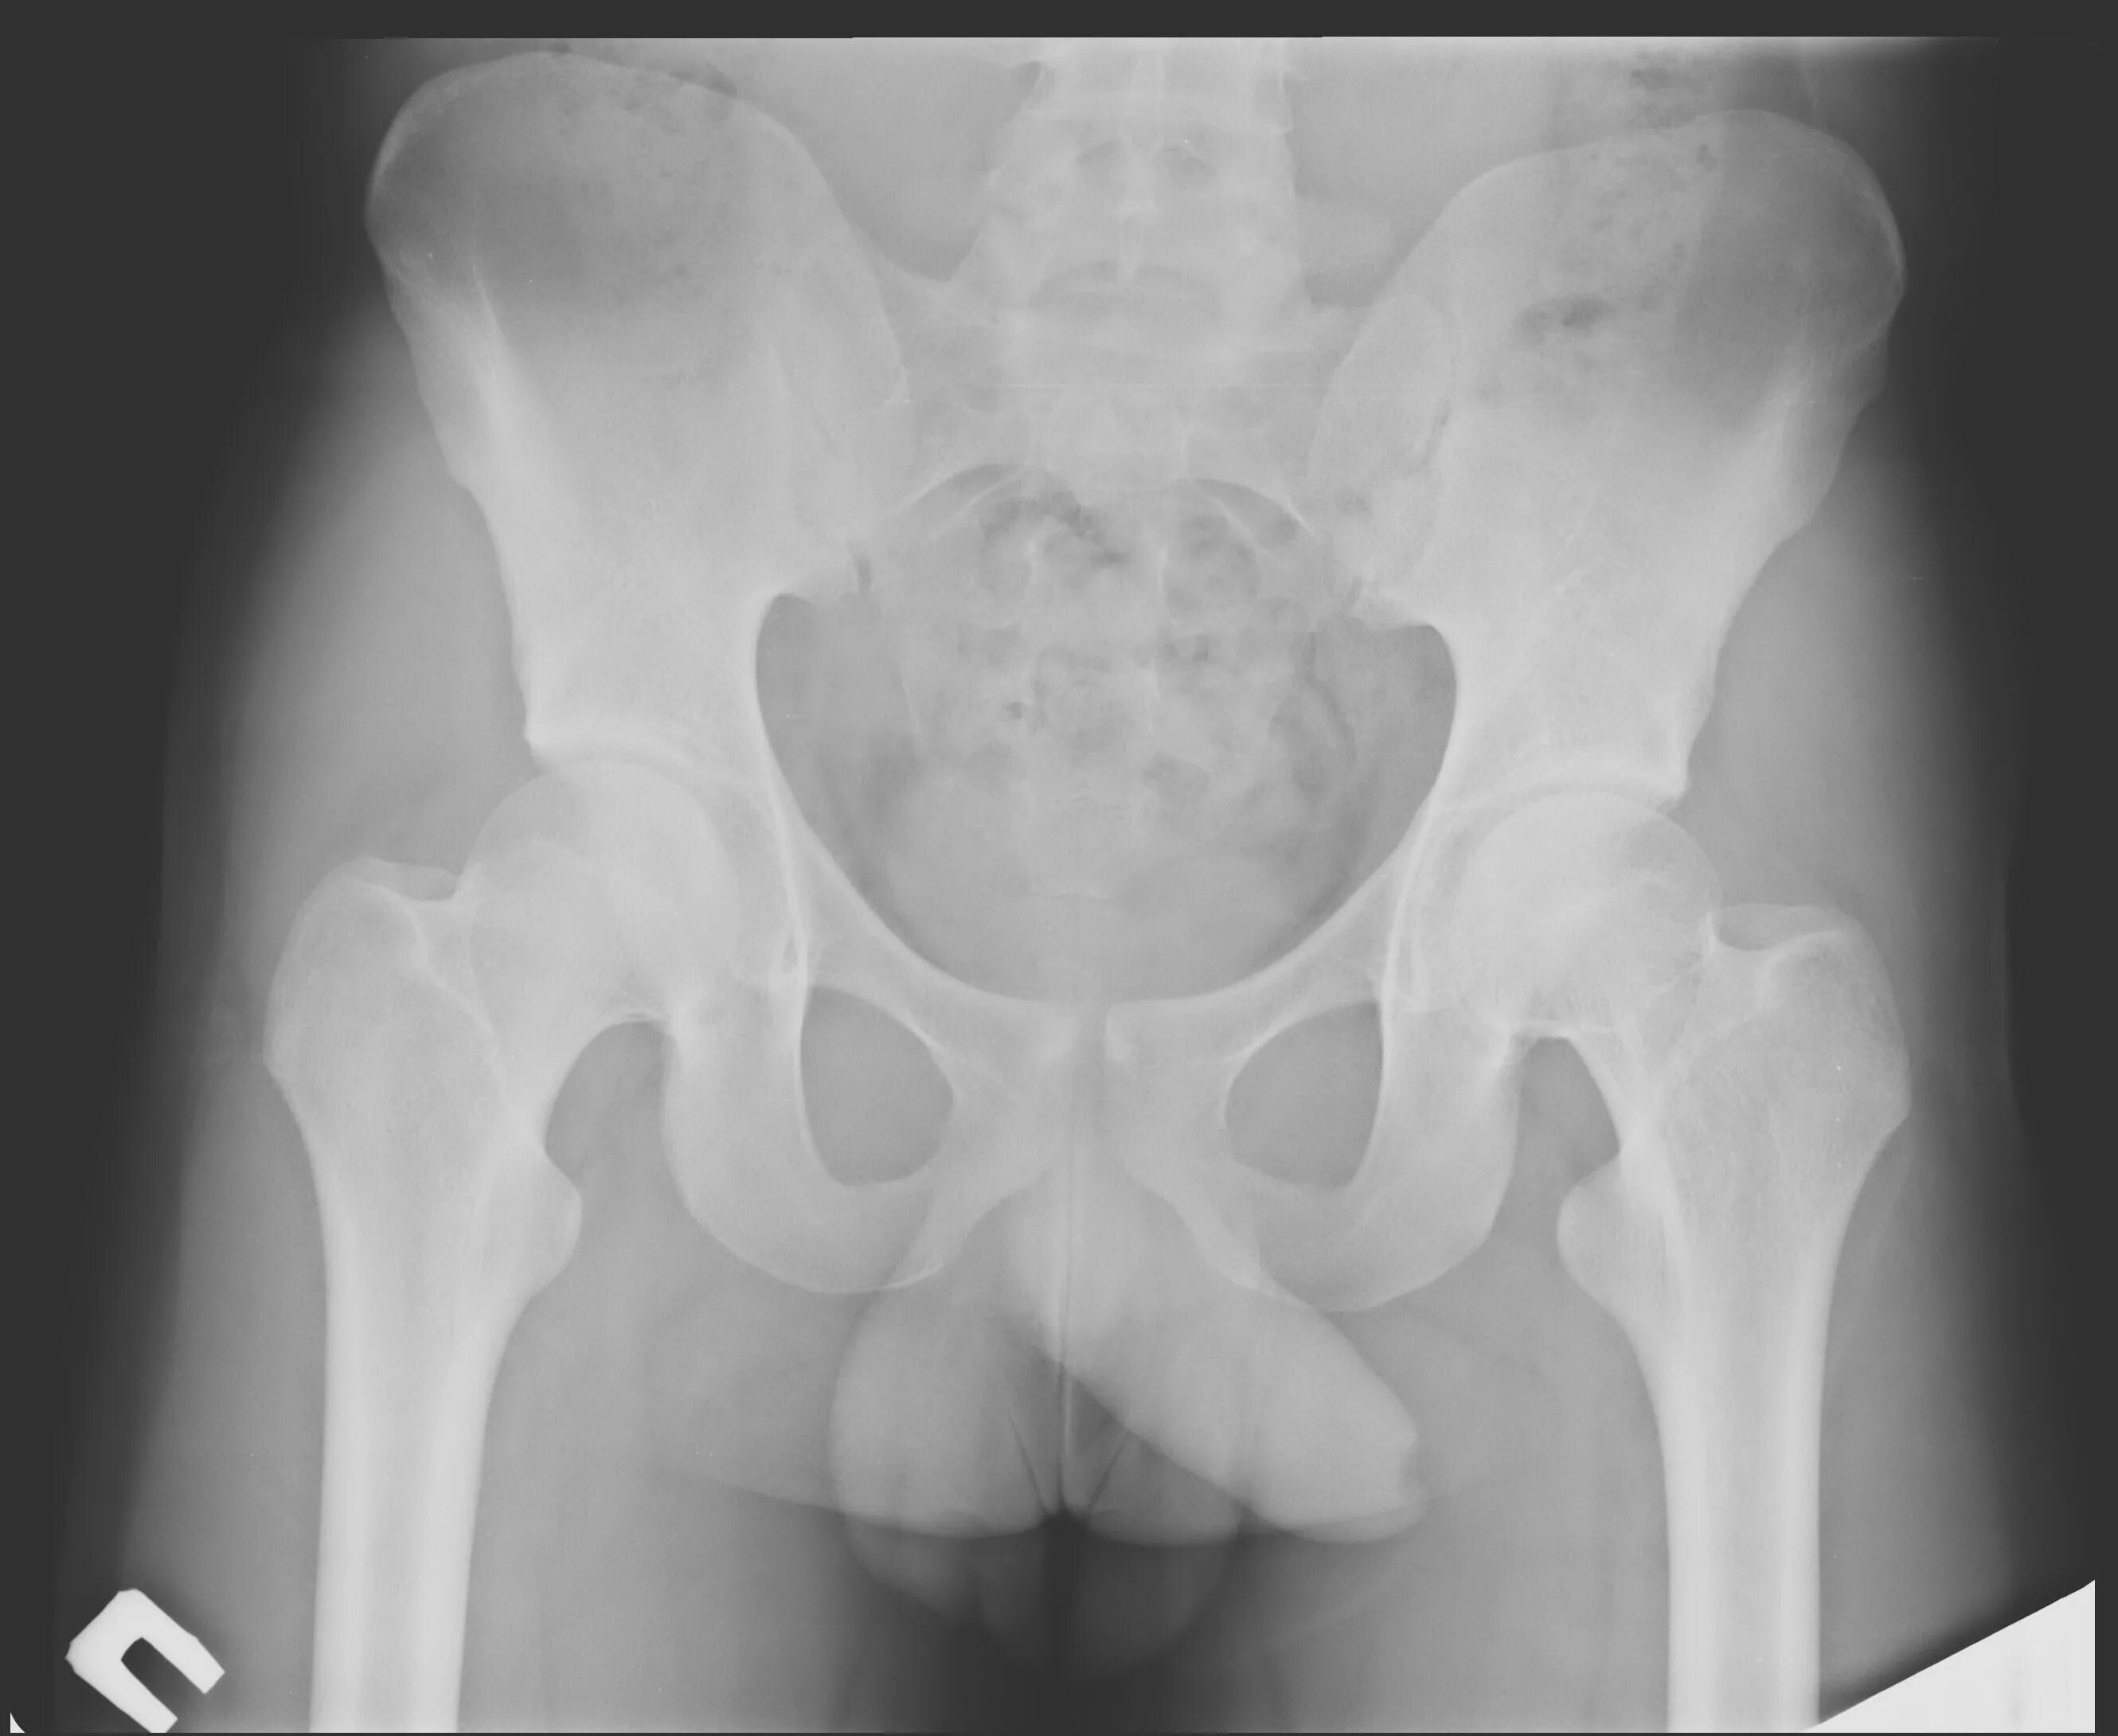 Шейка бедра у мужчин. Рентген таза перелом шейки бедра. Перелом шейки бедра рентген. Рентген таза перелом тазобедренного сустава. Перелом шейки тазобедренного сустава рентген.